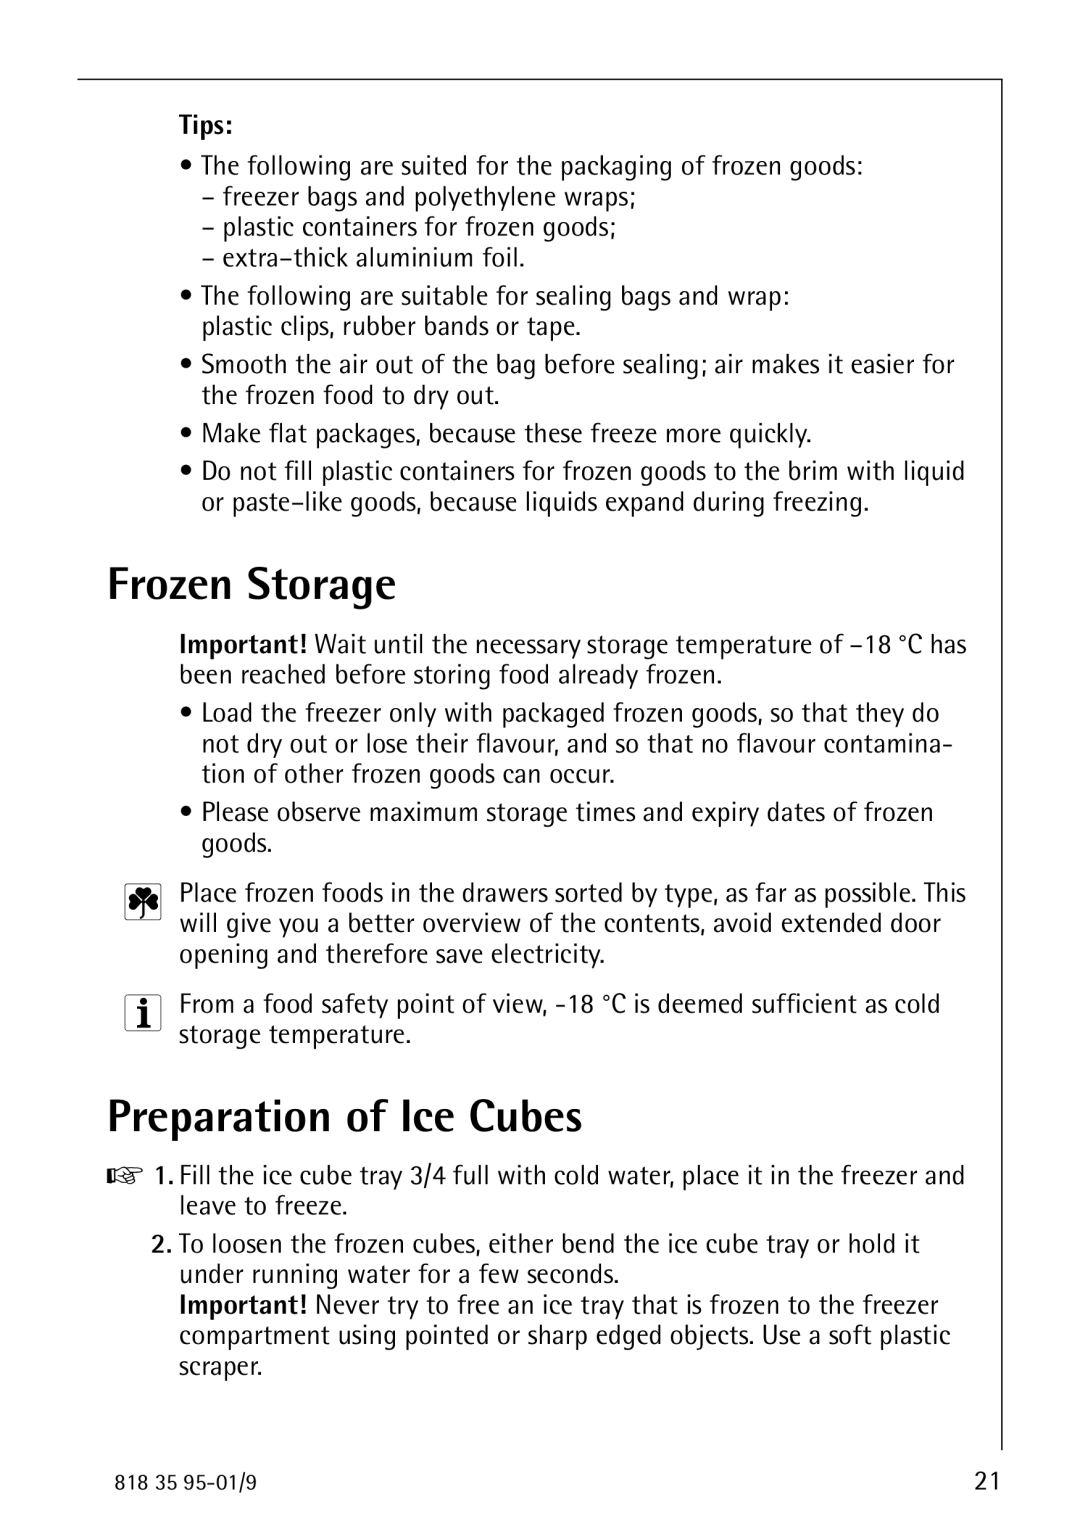 AEG 75248 GA1 manual Frozen Storage, Preparation of Ice Cubes, Tips 